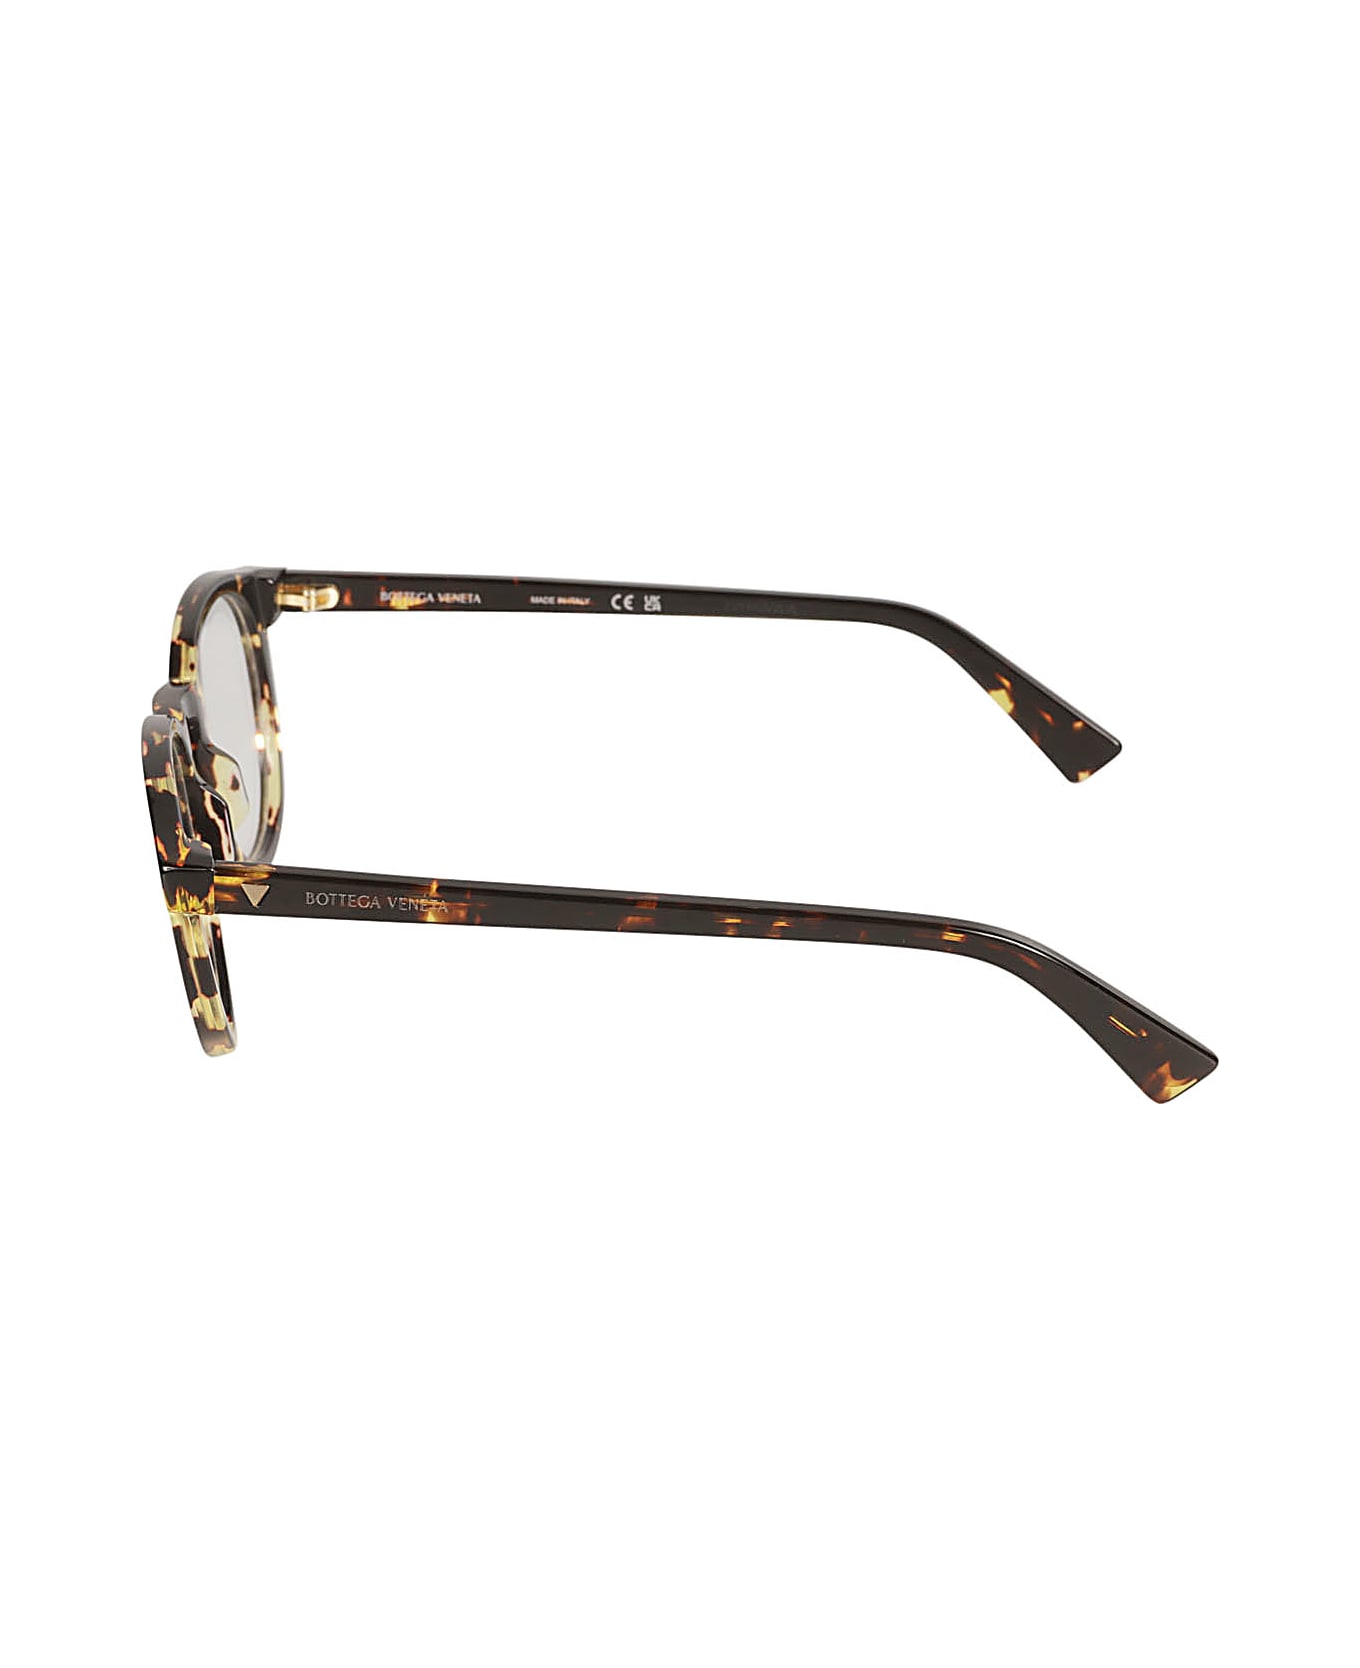 Bottega Veneta Eyewear Flame Effect Round Frame Glasses - Havana/Transparent